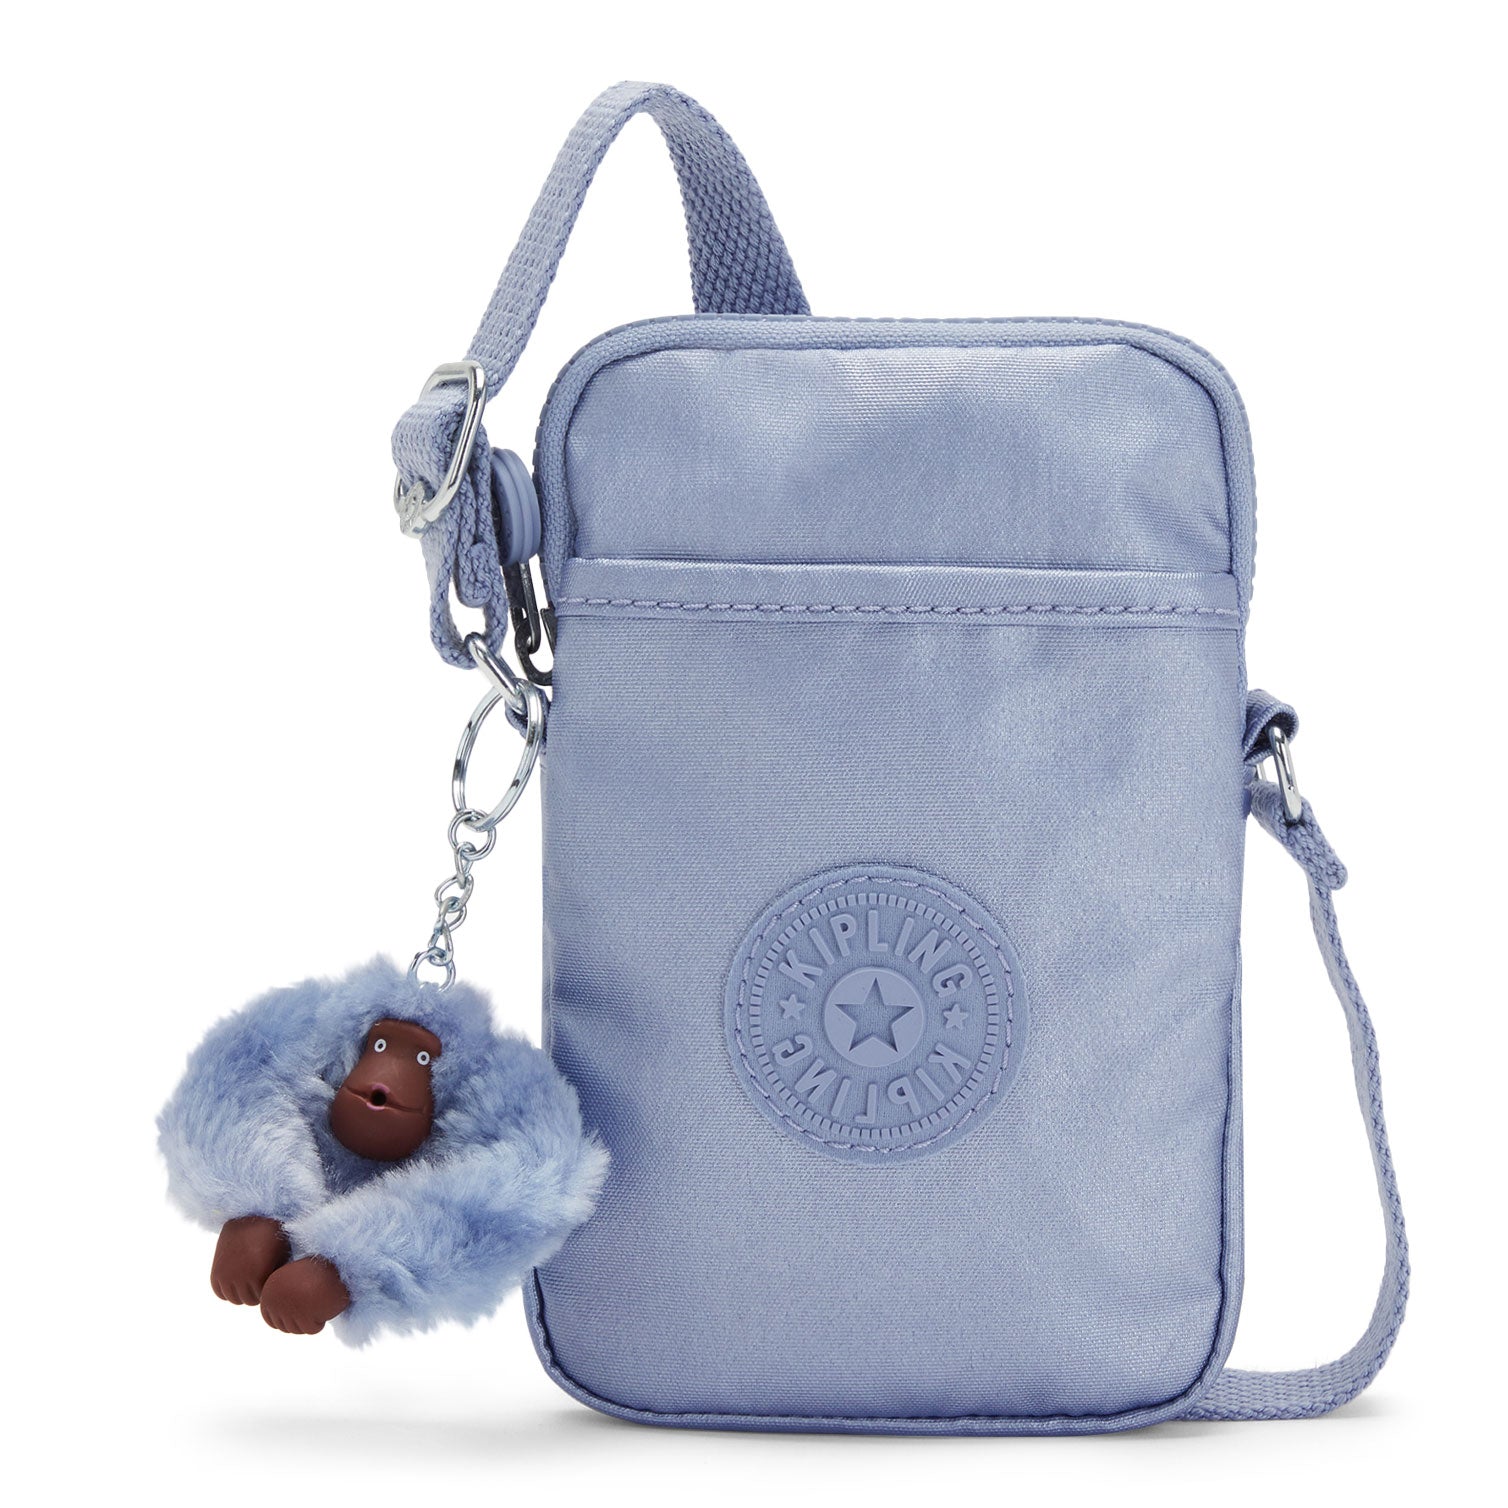 Kipling Tally Crossbody Phone Bag Blue Bleu